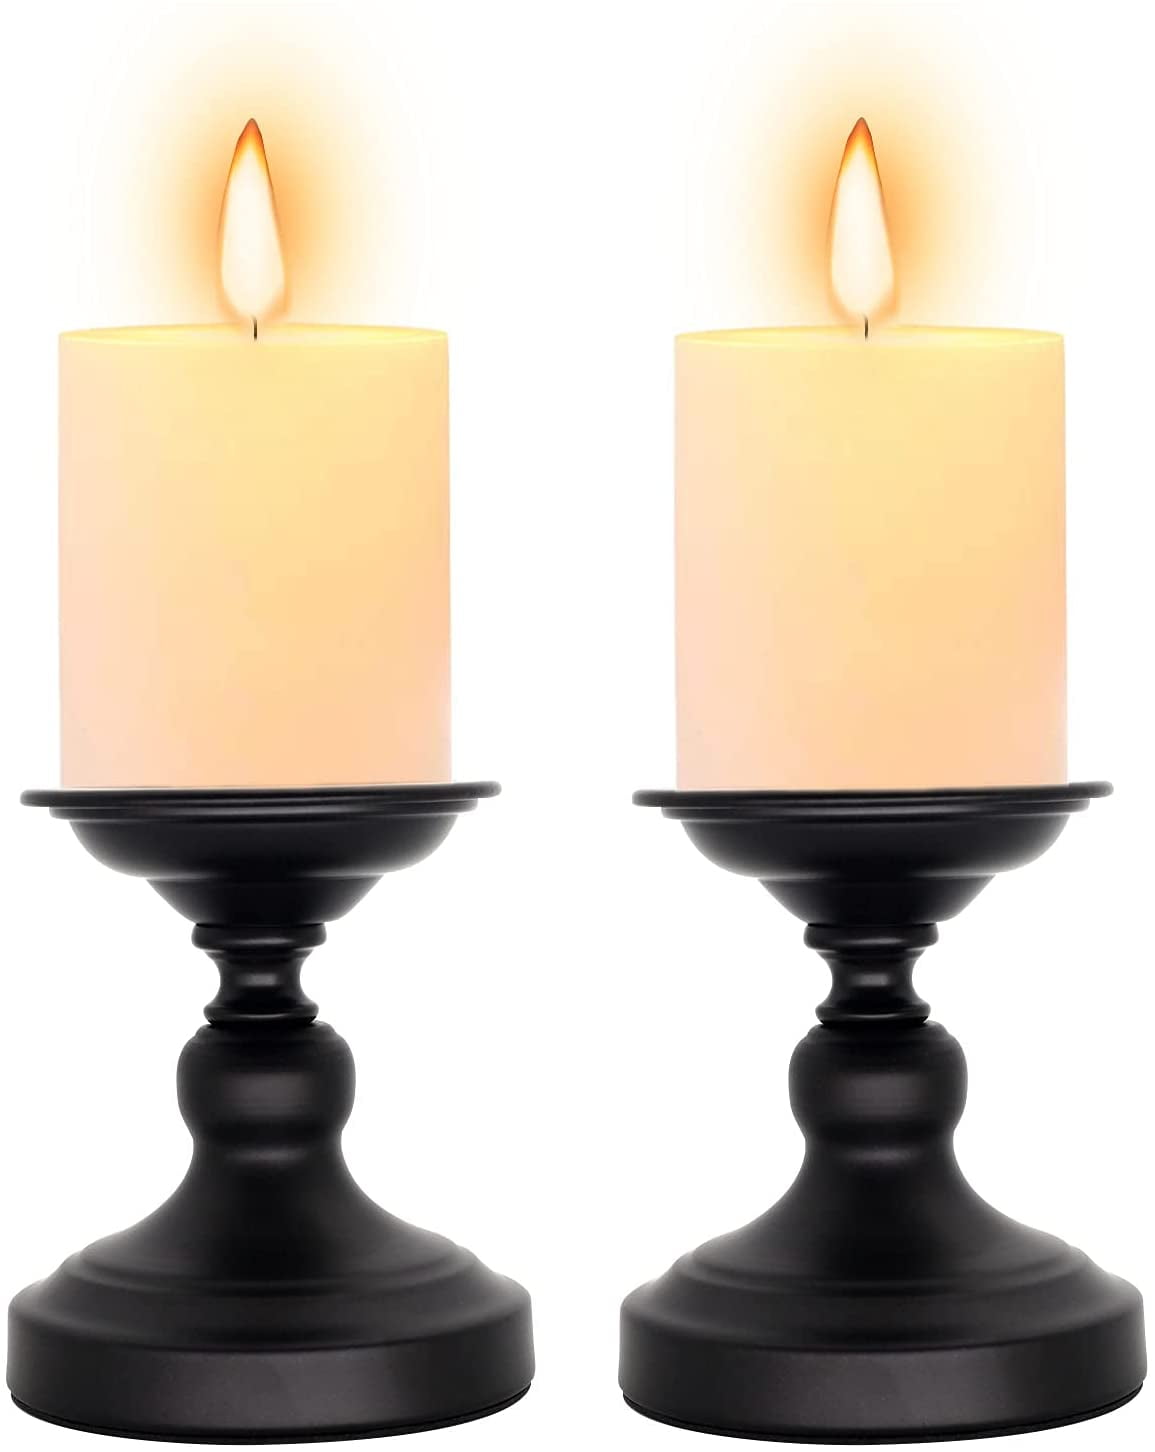 VINCIGANT Black Metal Taper Candle Holders,Candlestick Holders Set for Taper Pillar Candles Vintage Decor Centerpiece for Table,Home,Wedding,Set of 6